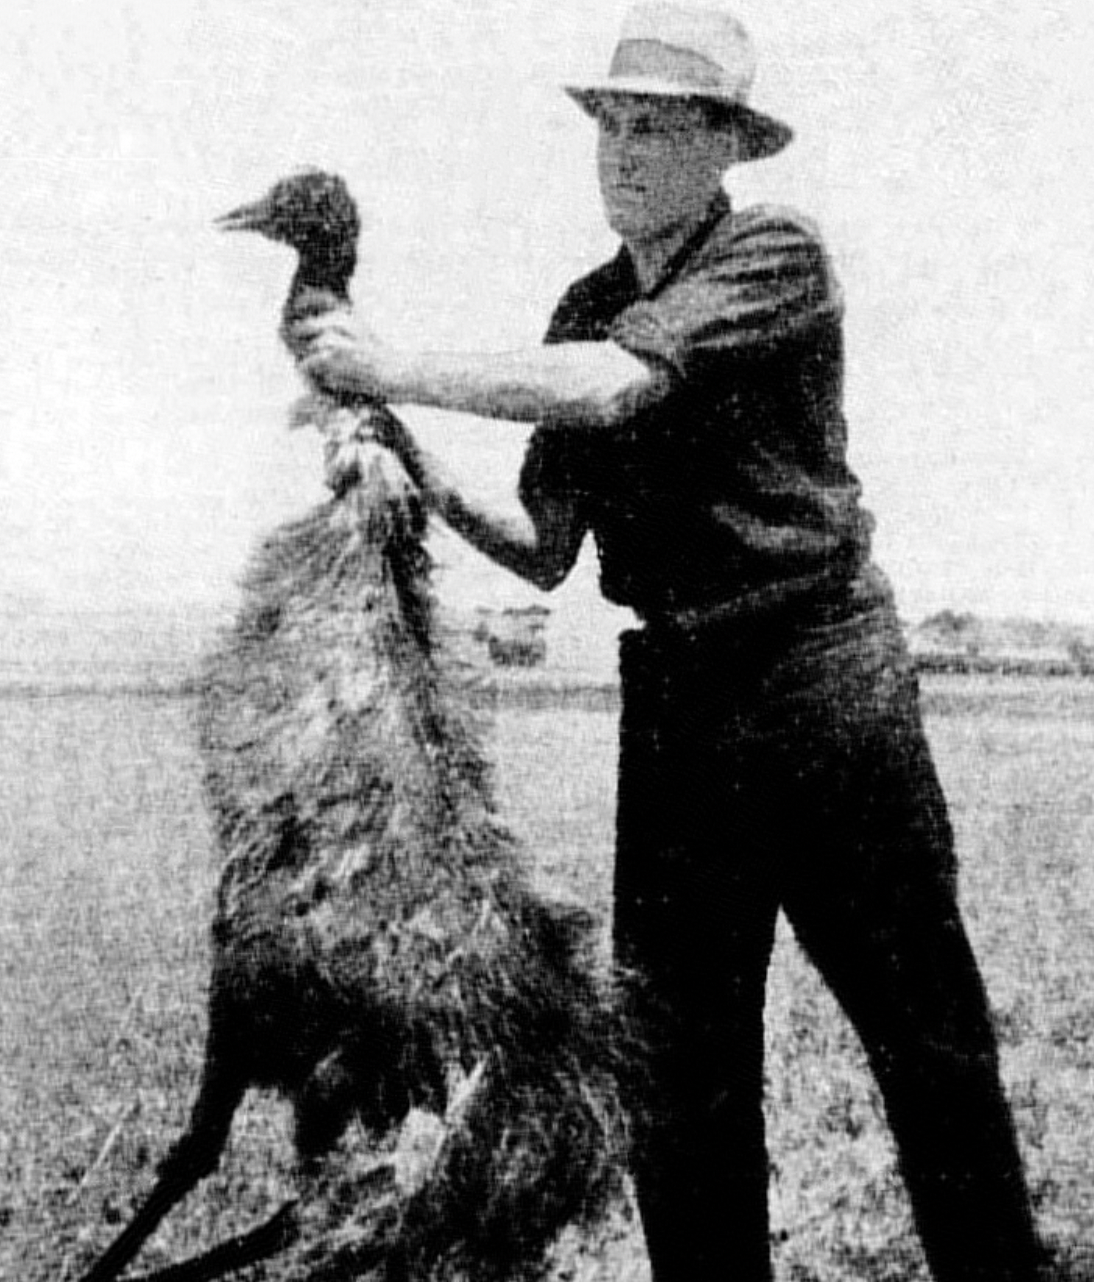 “Aussies lost to Emus”